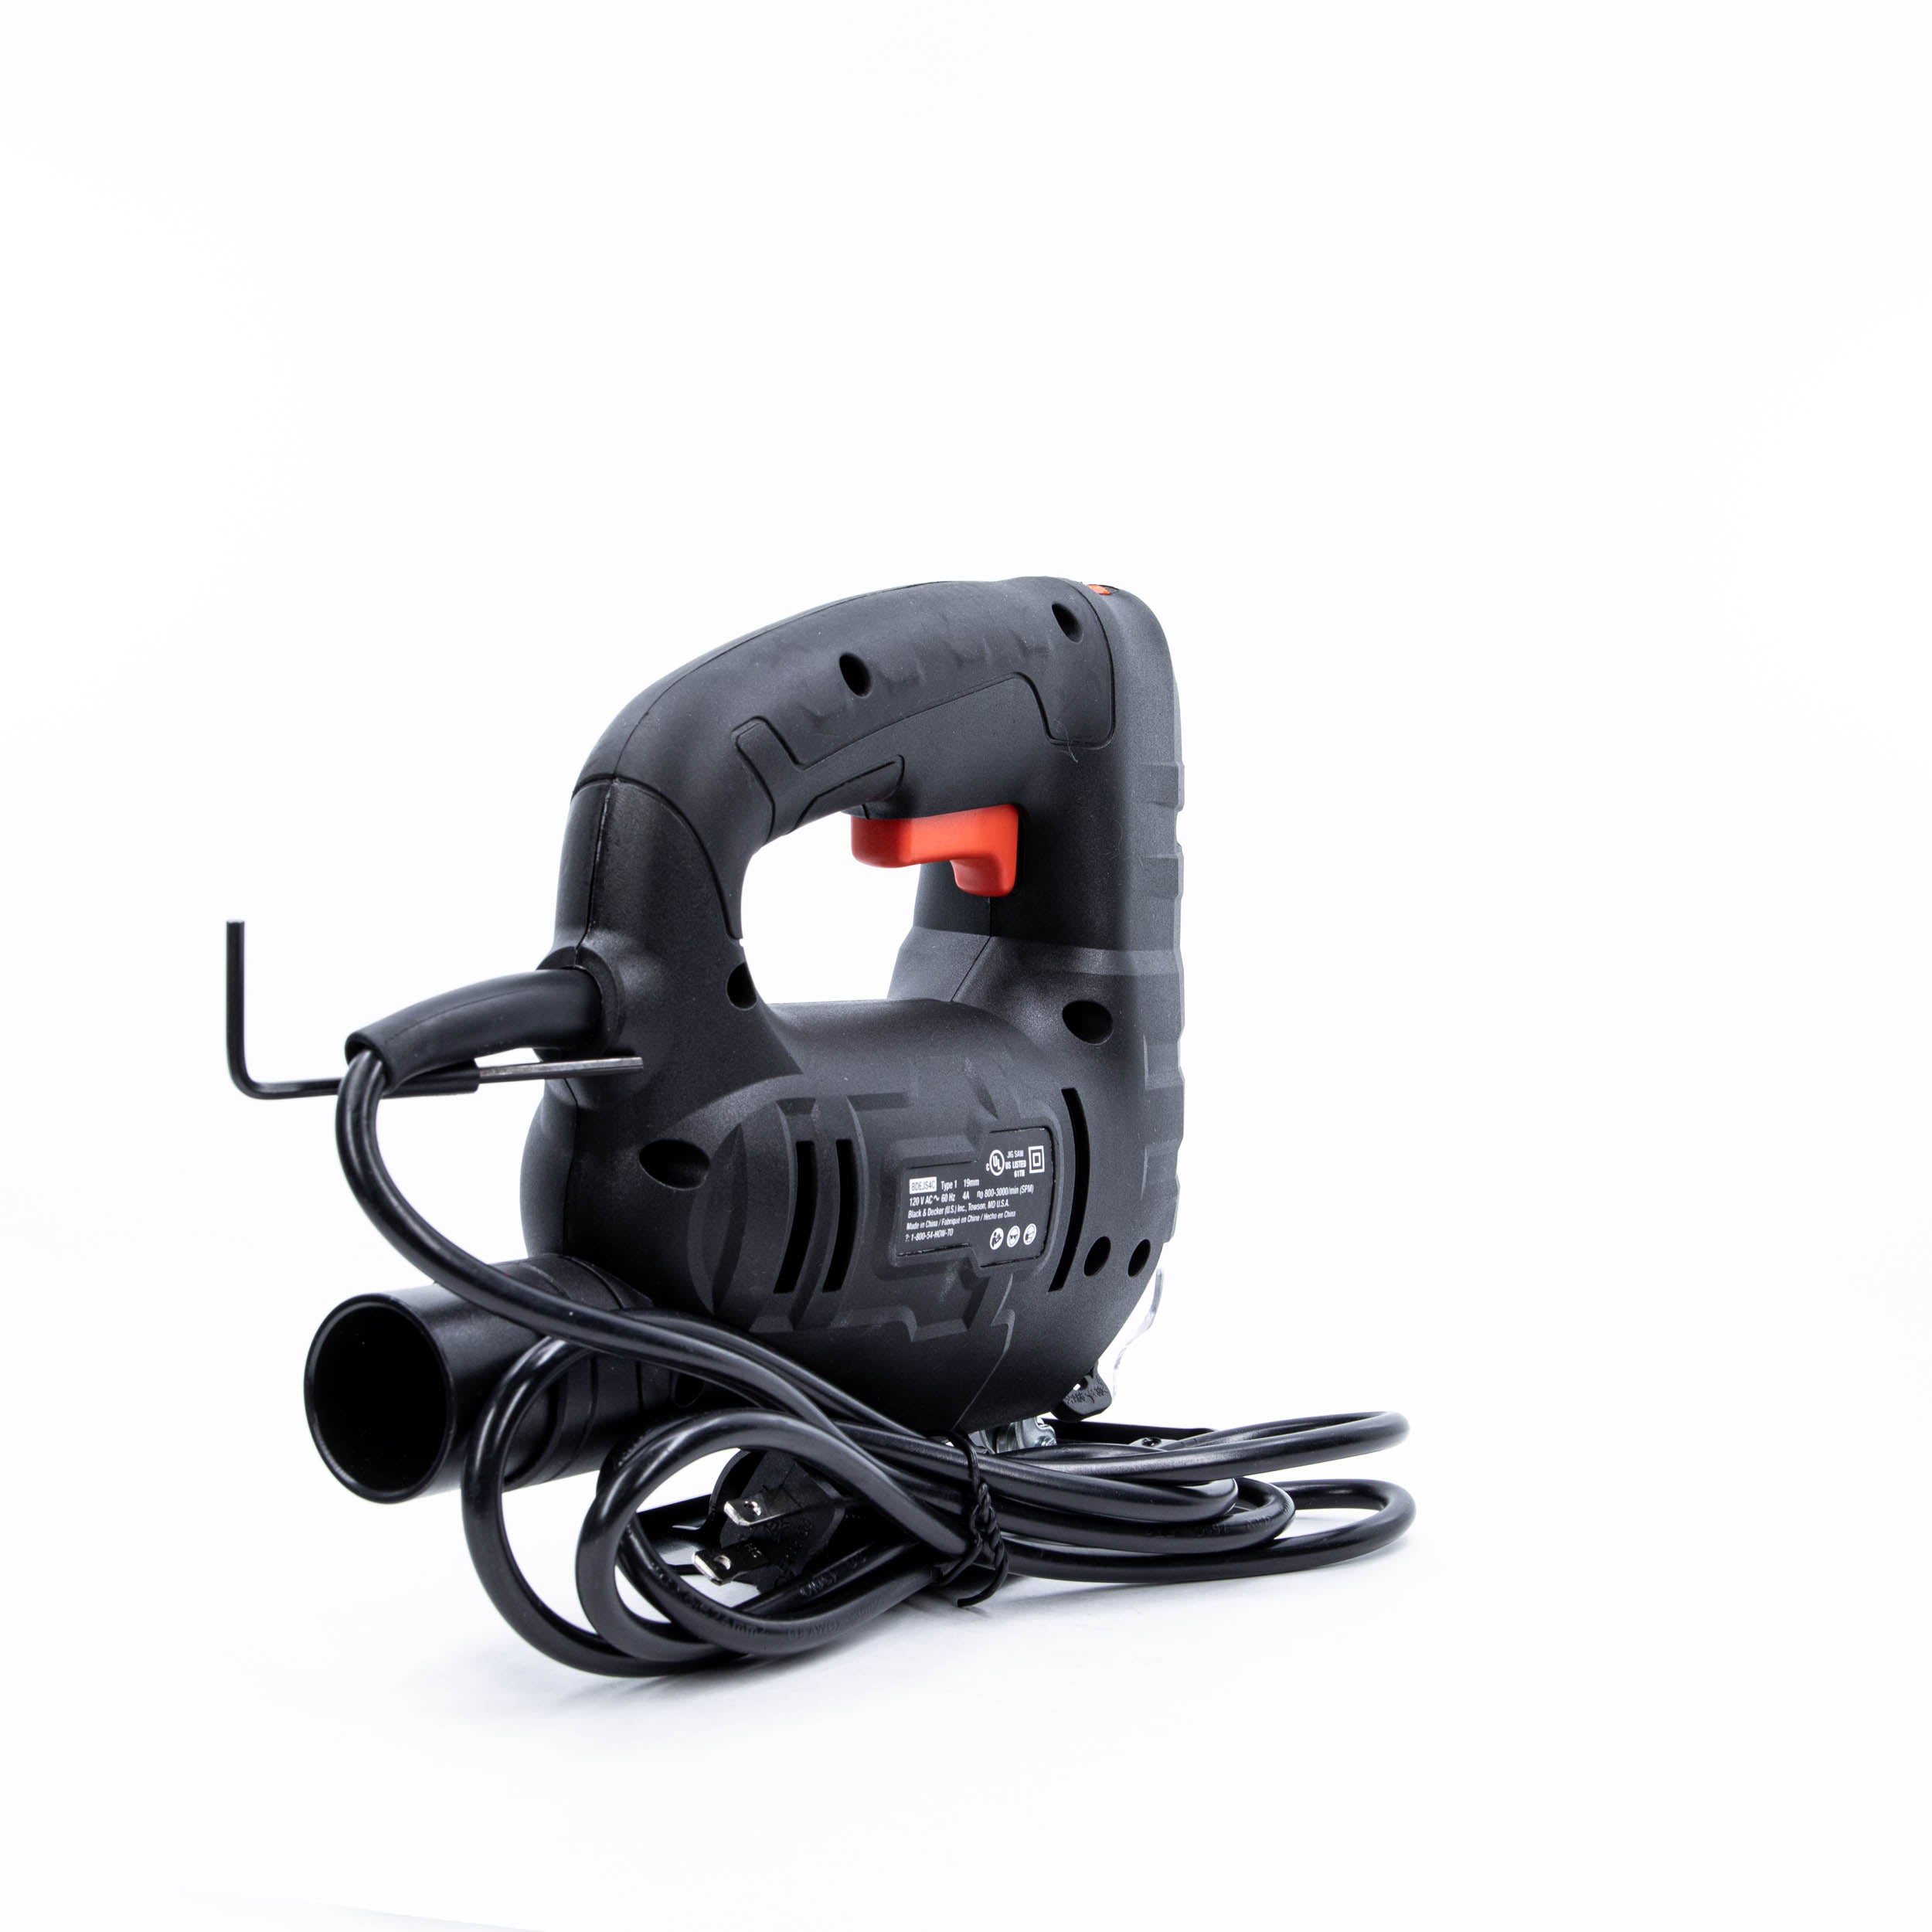 BLACK+DECKER 4.5 Amp Jig Saw - tools - by owner - sale - craigslist